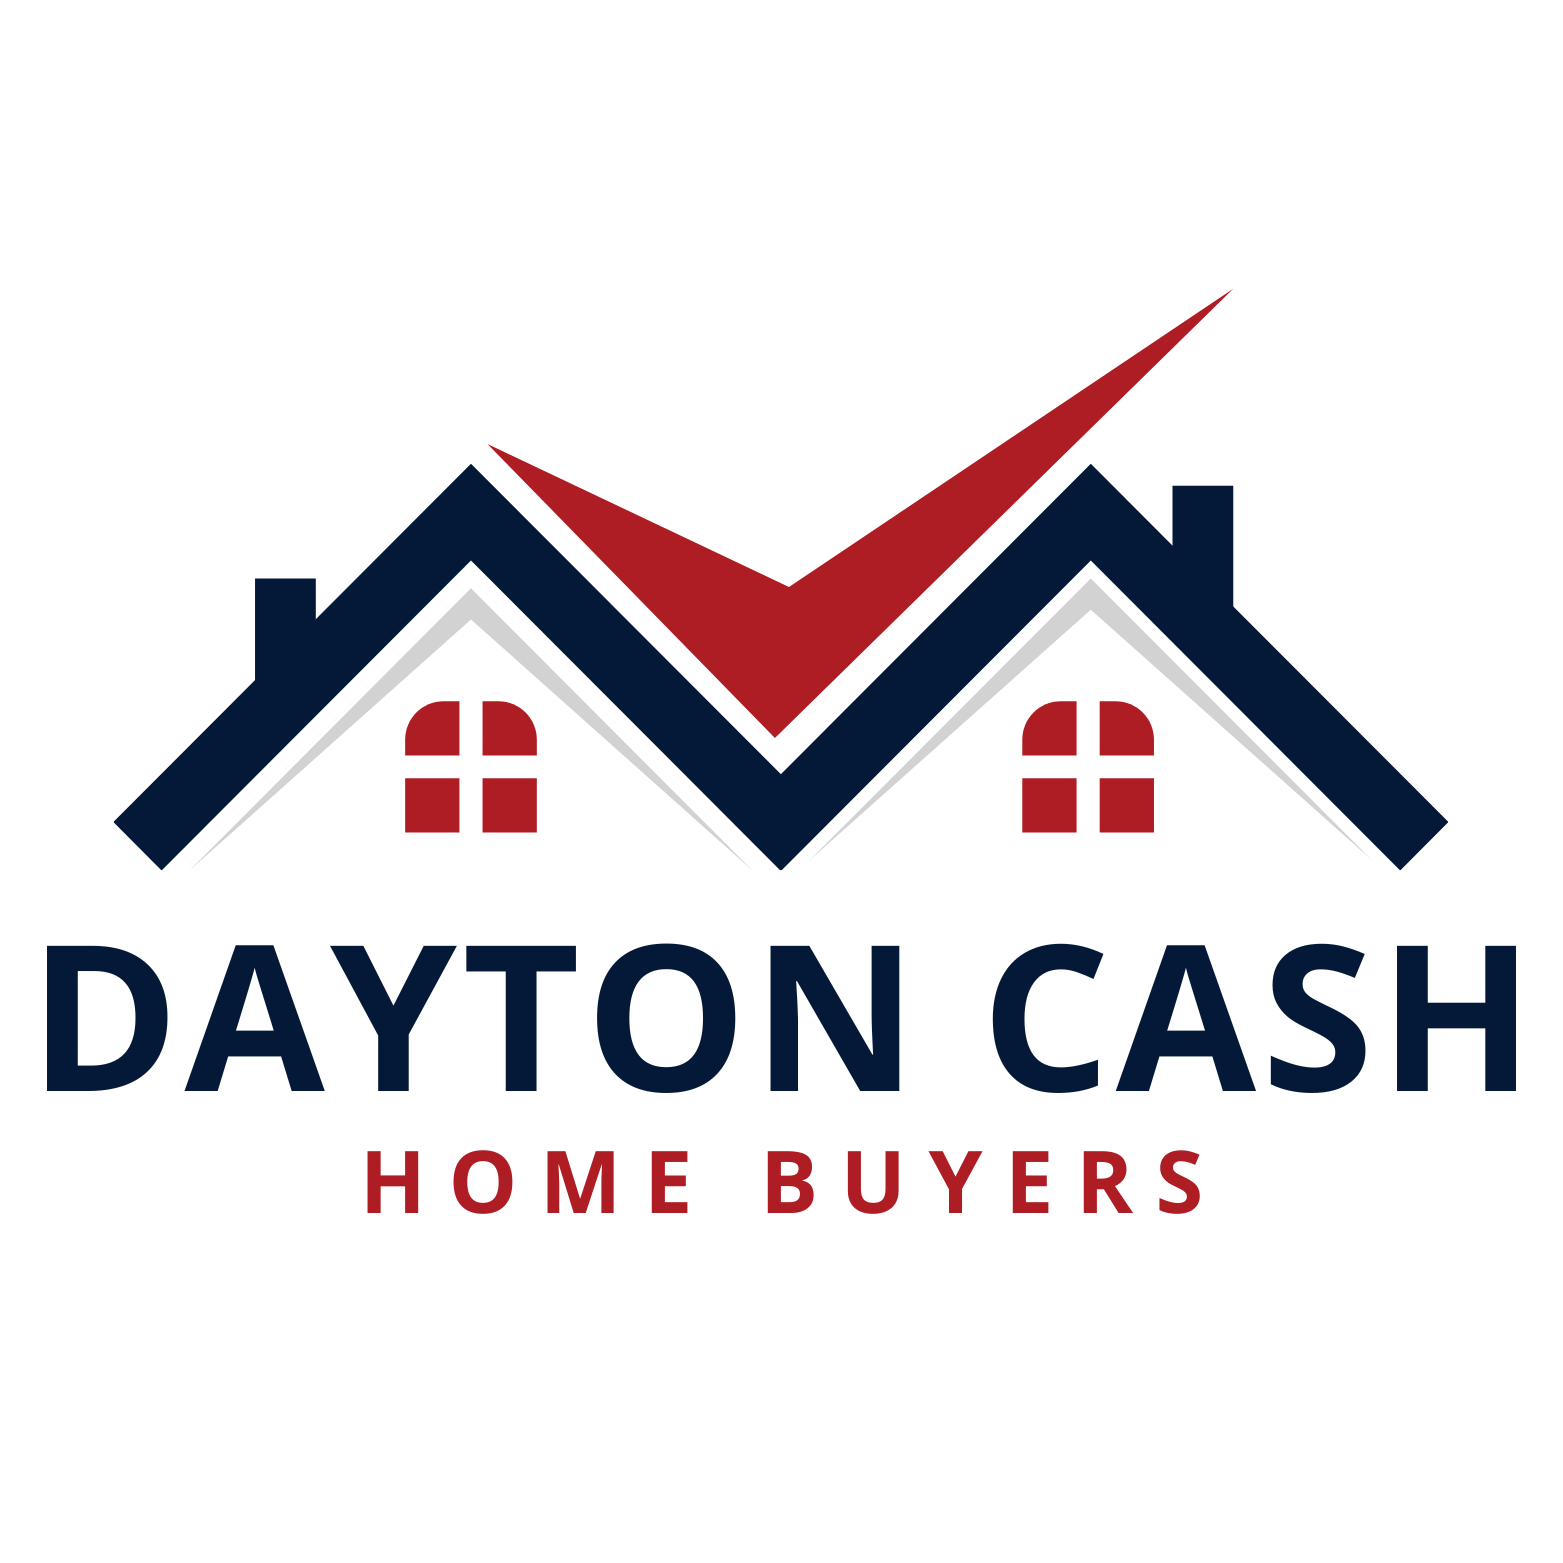 Dayton-Cash-Home-Buyers-logo.png